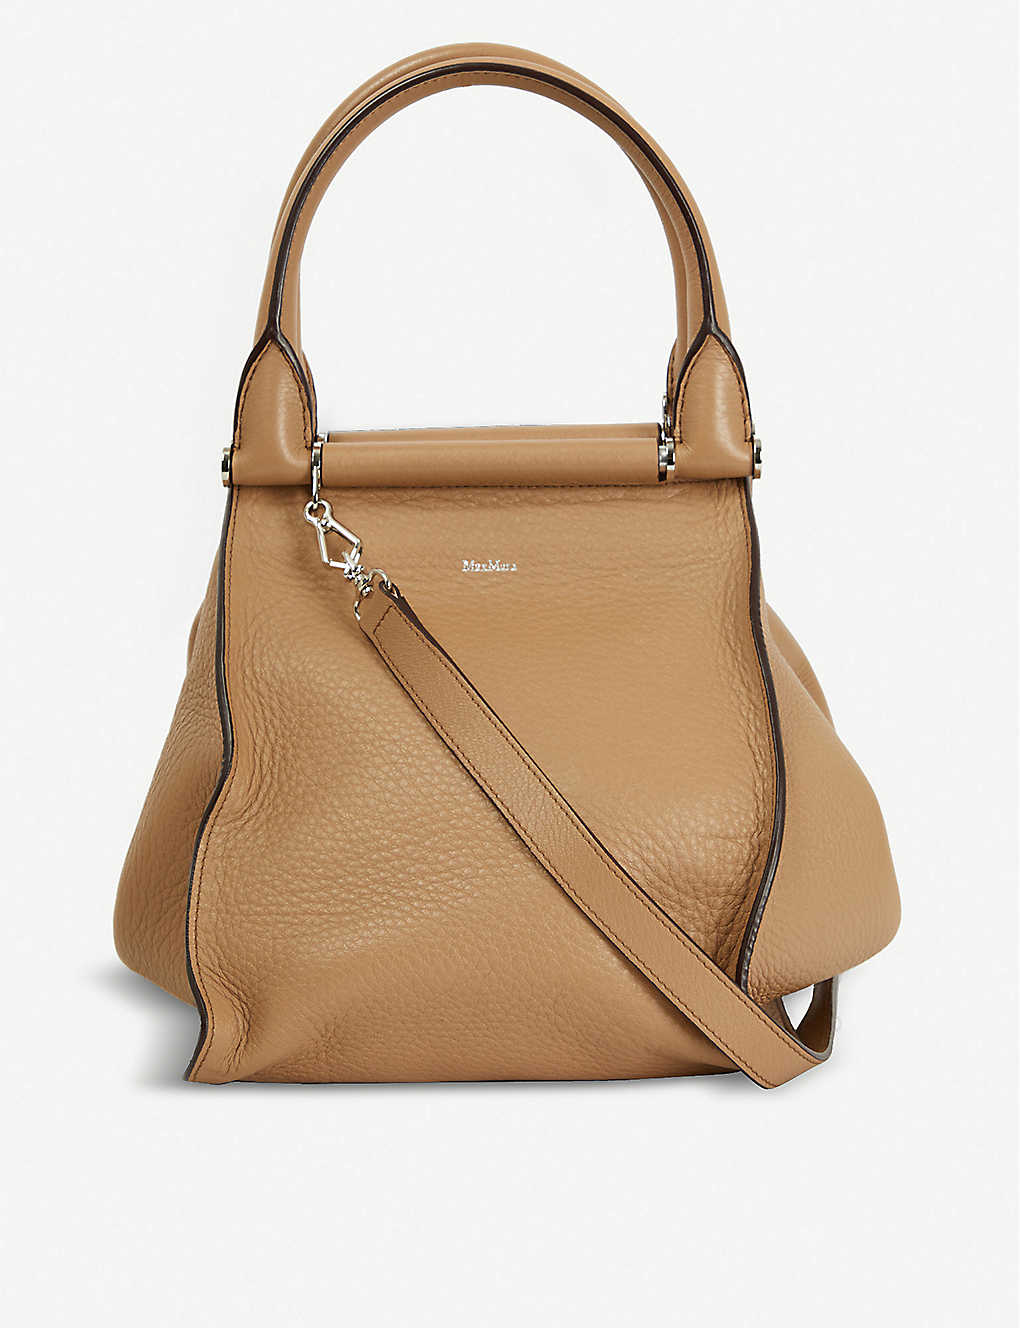 VESTIAIRE COLLECTIVE - Max Mara leather shoulder bag | Selfridges.com